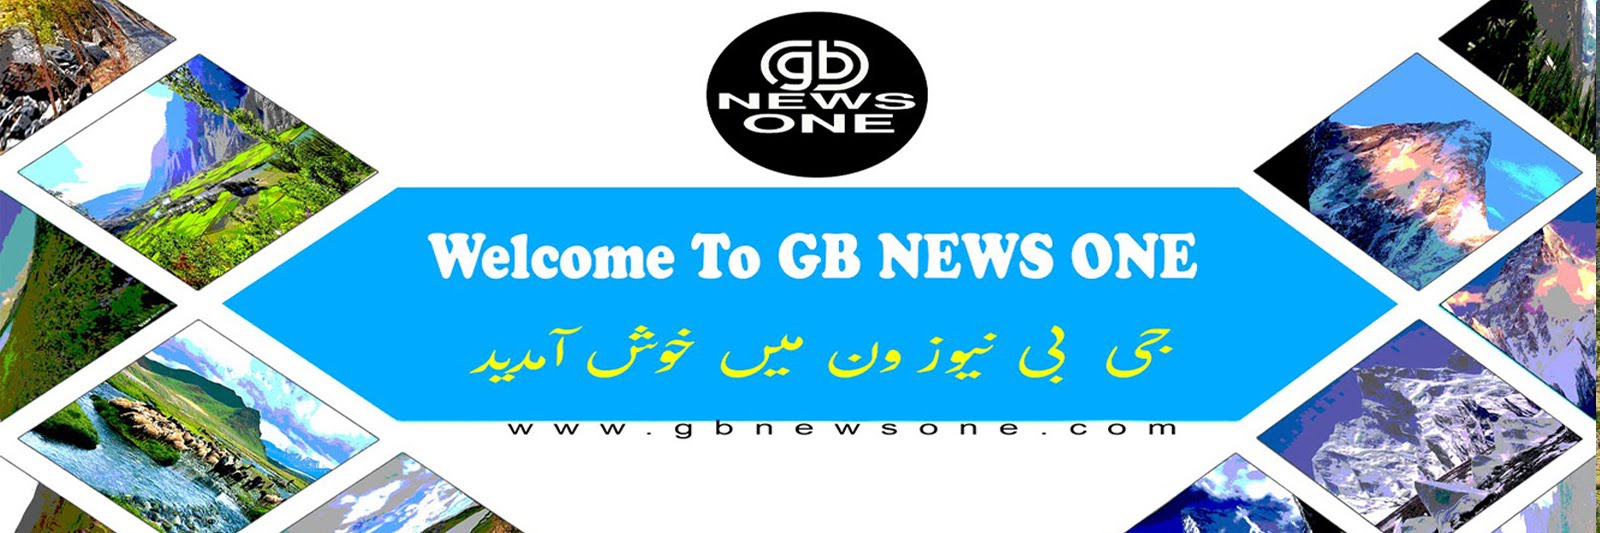 GB NEWS ONE